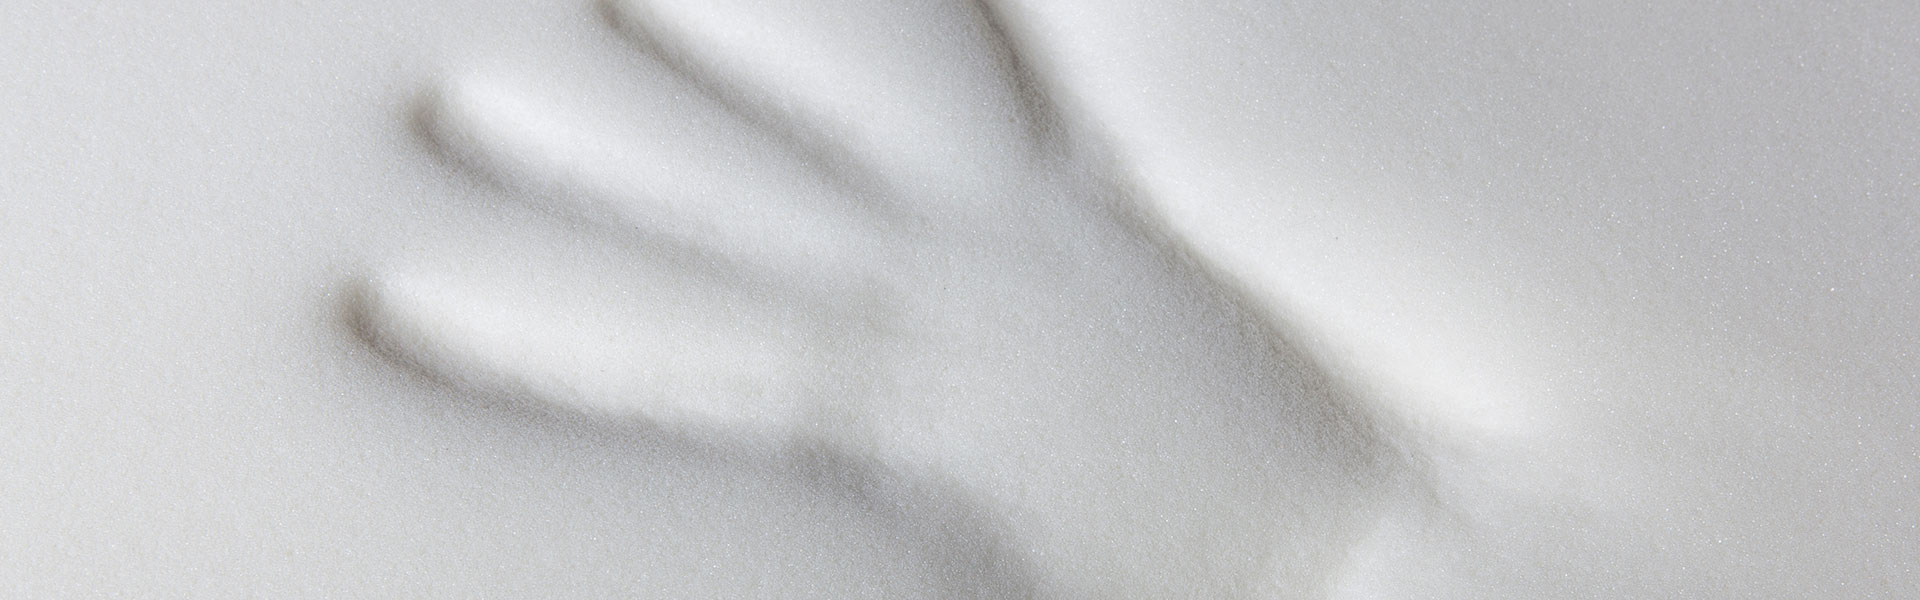 Sensillo детский матрас Visco -латекс- кашемир 120 x 60 x 13 cm 